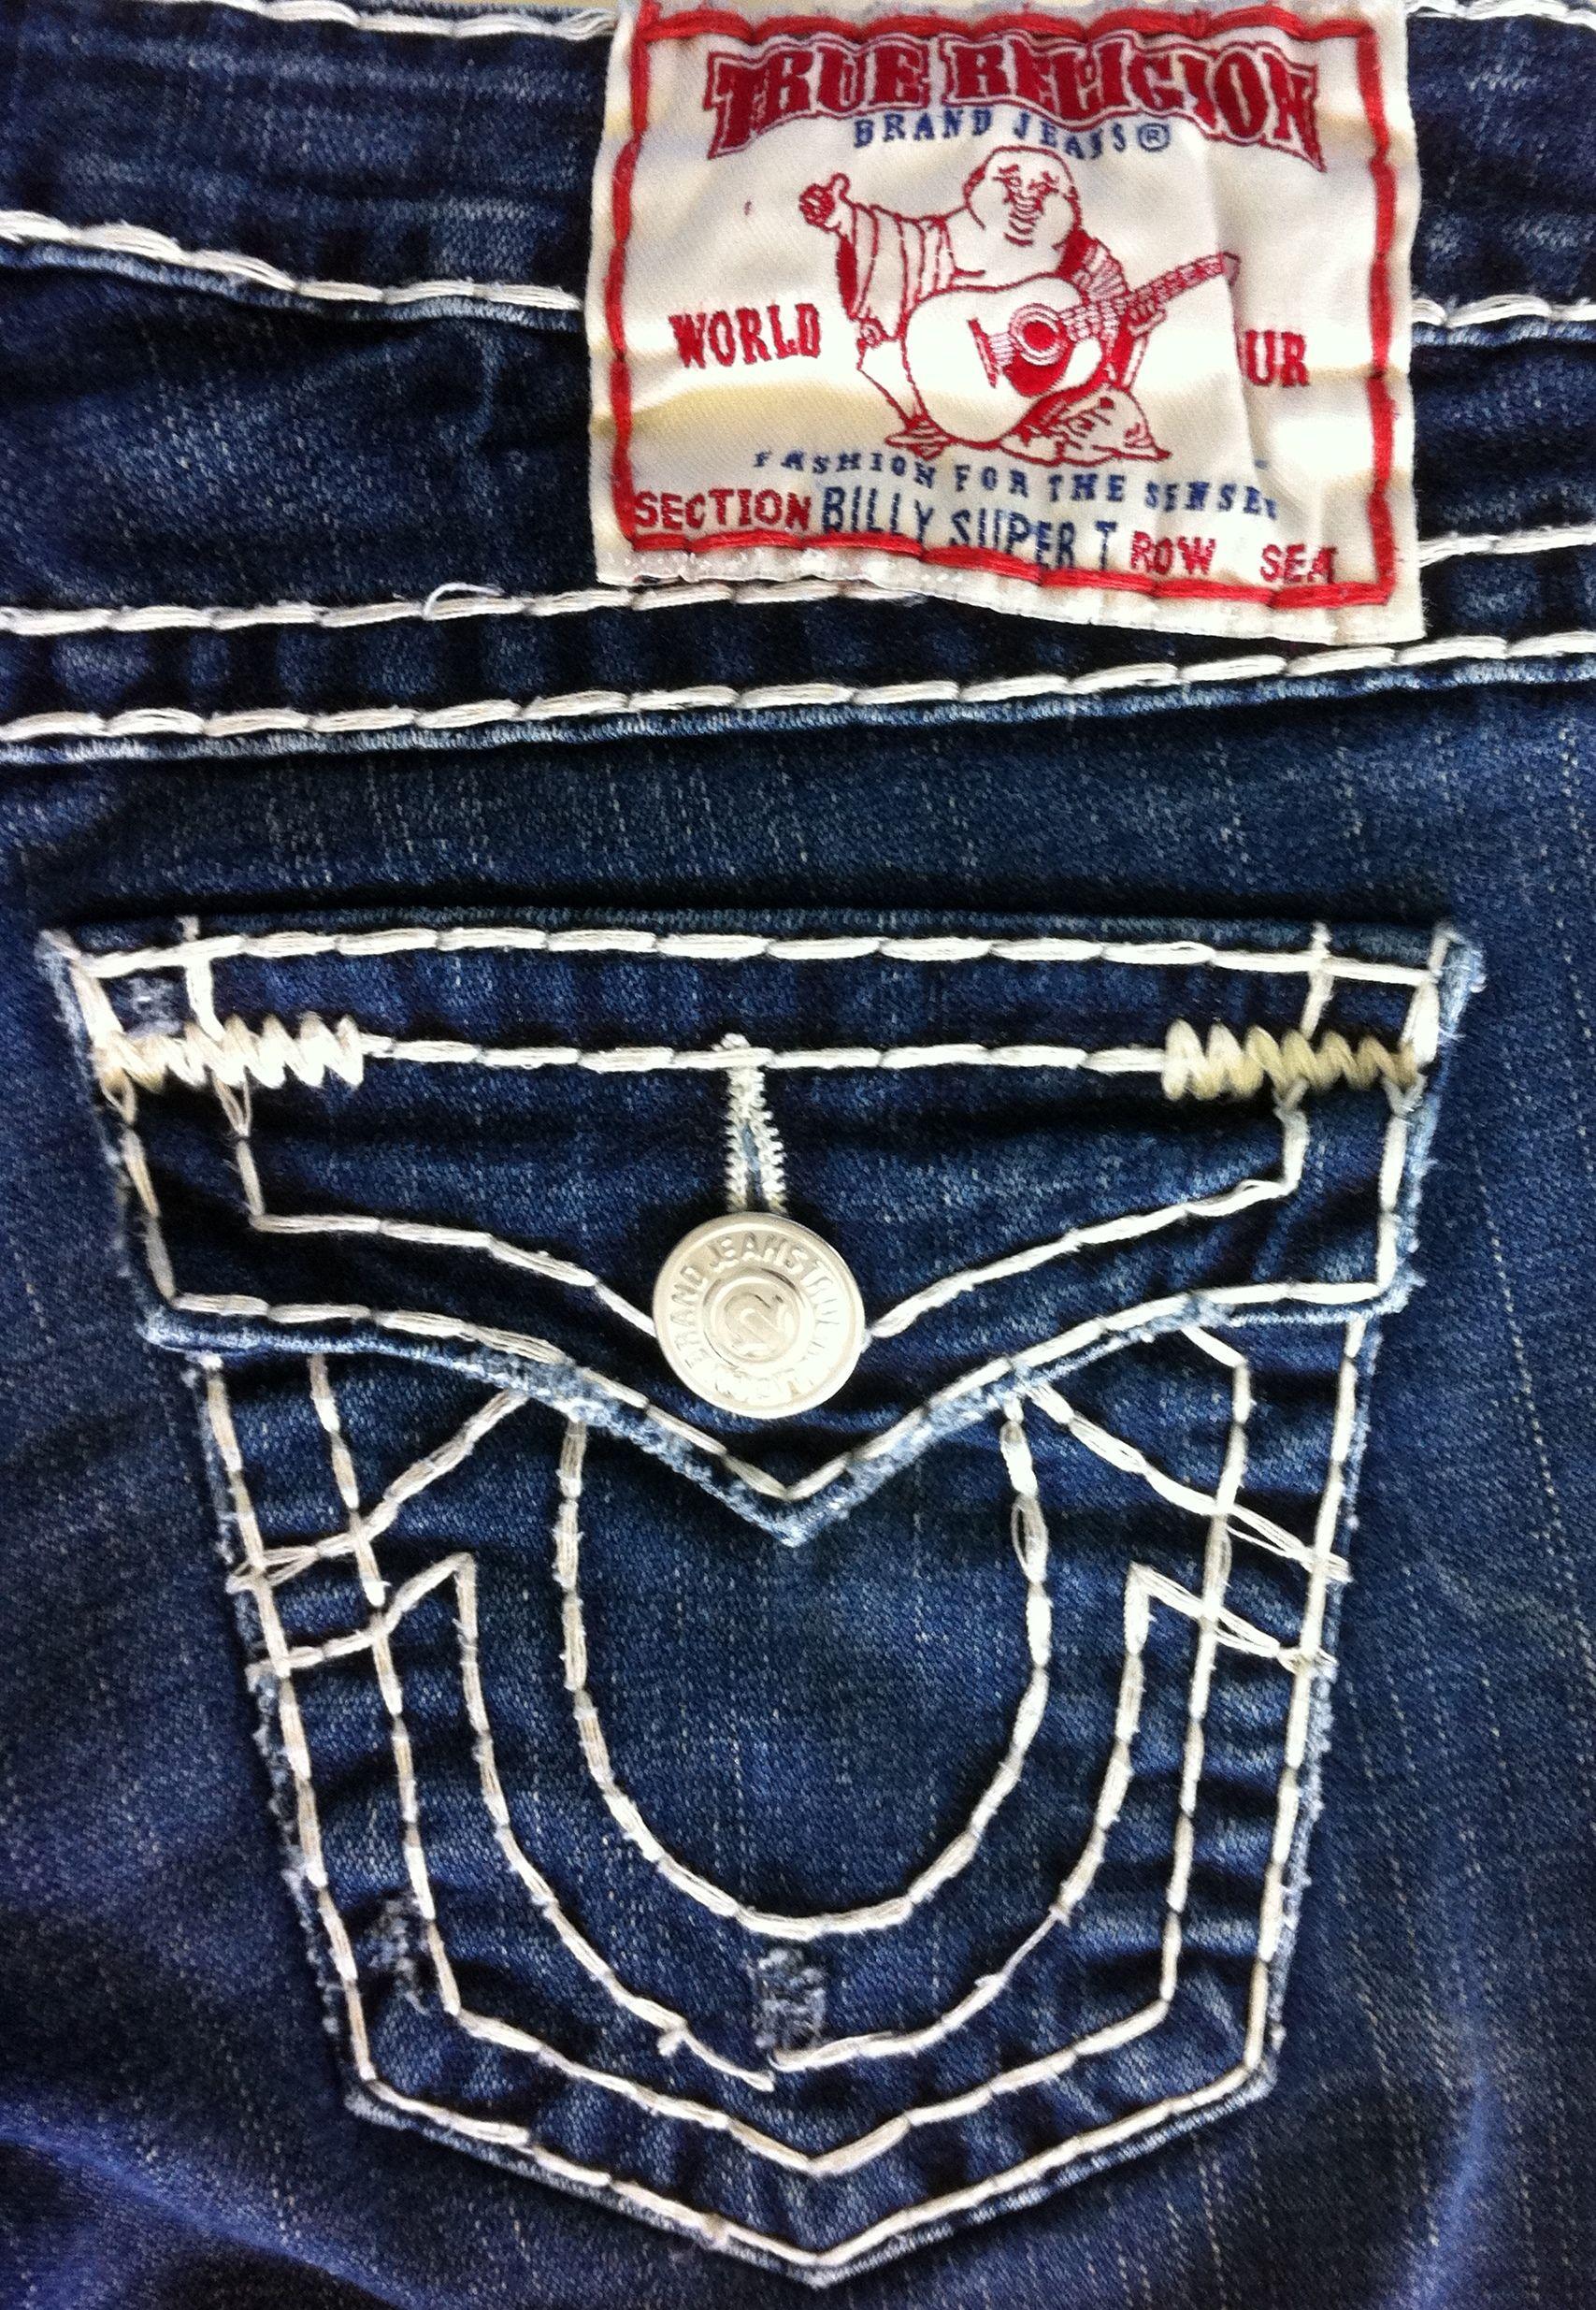 True Religion Jeans Logo - True Religion Jeans $47.99 At Meta Exchange in Baton Rouge!